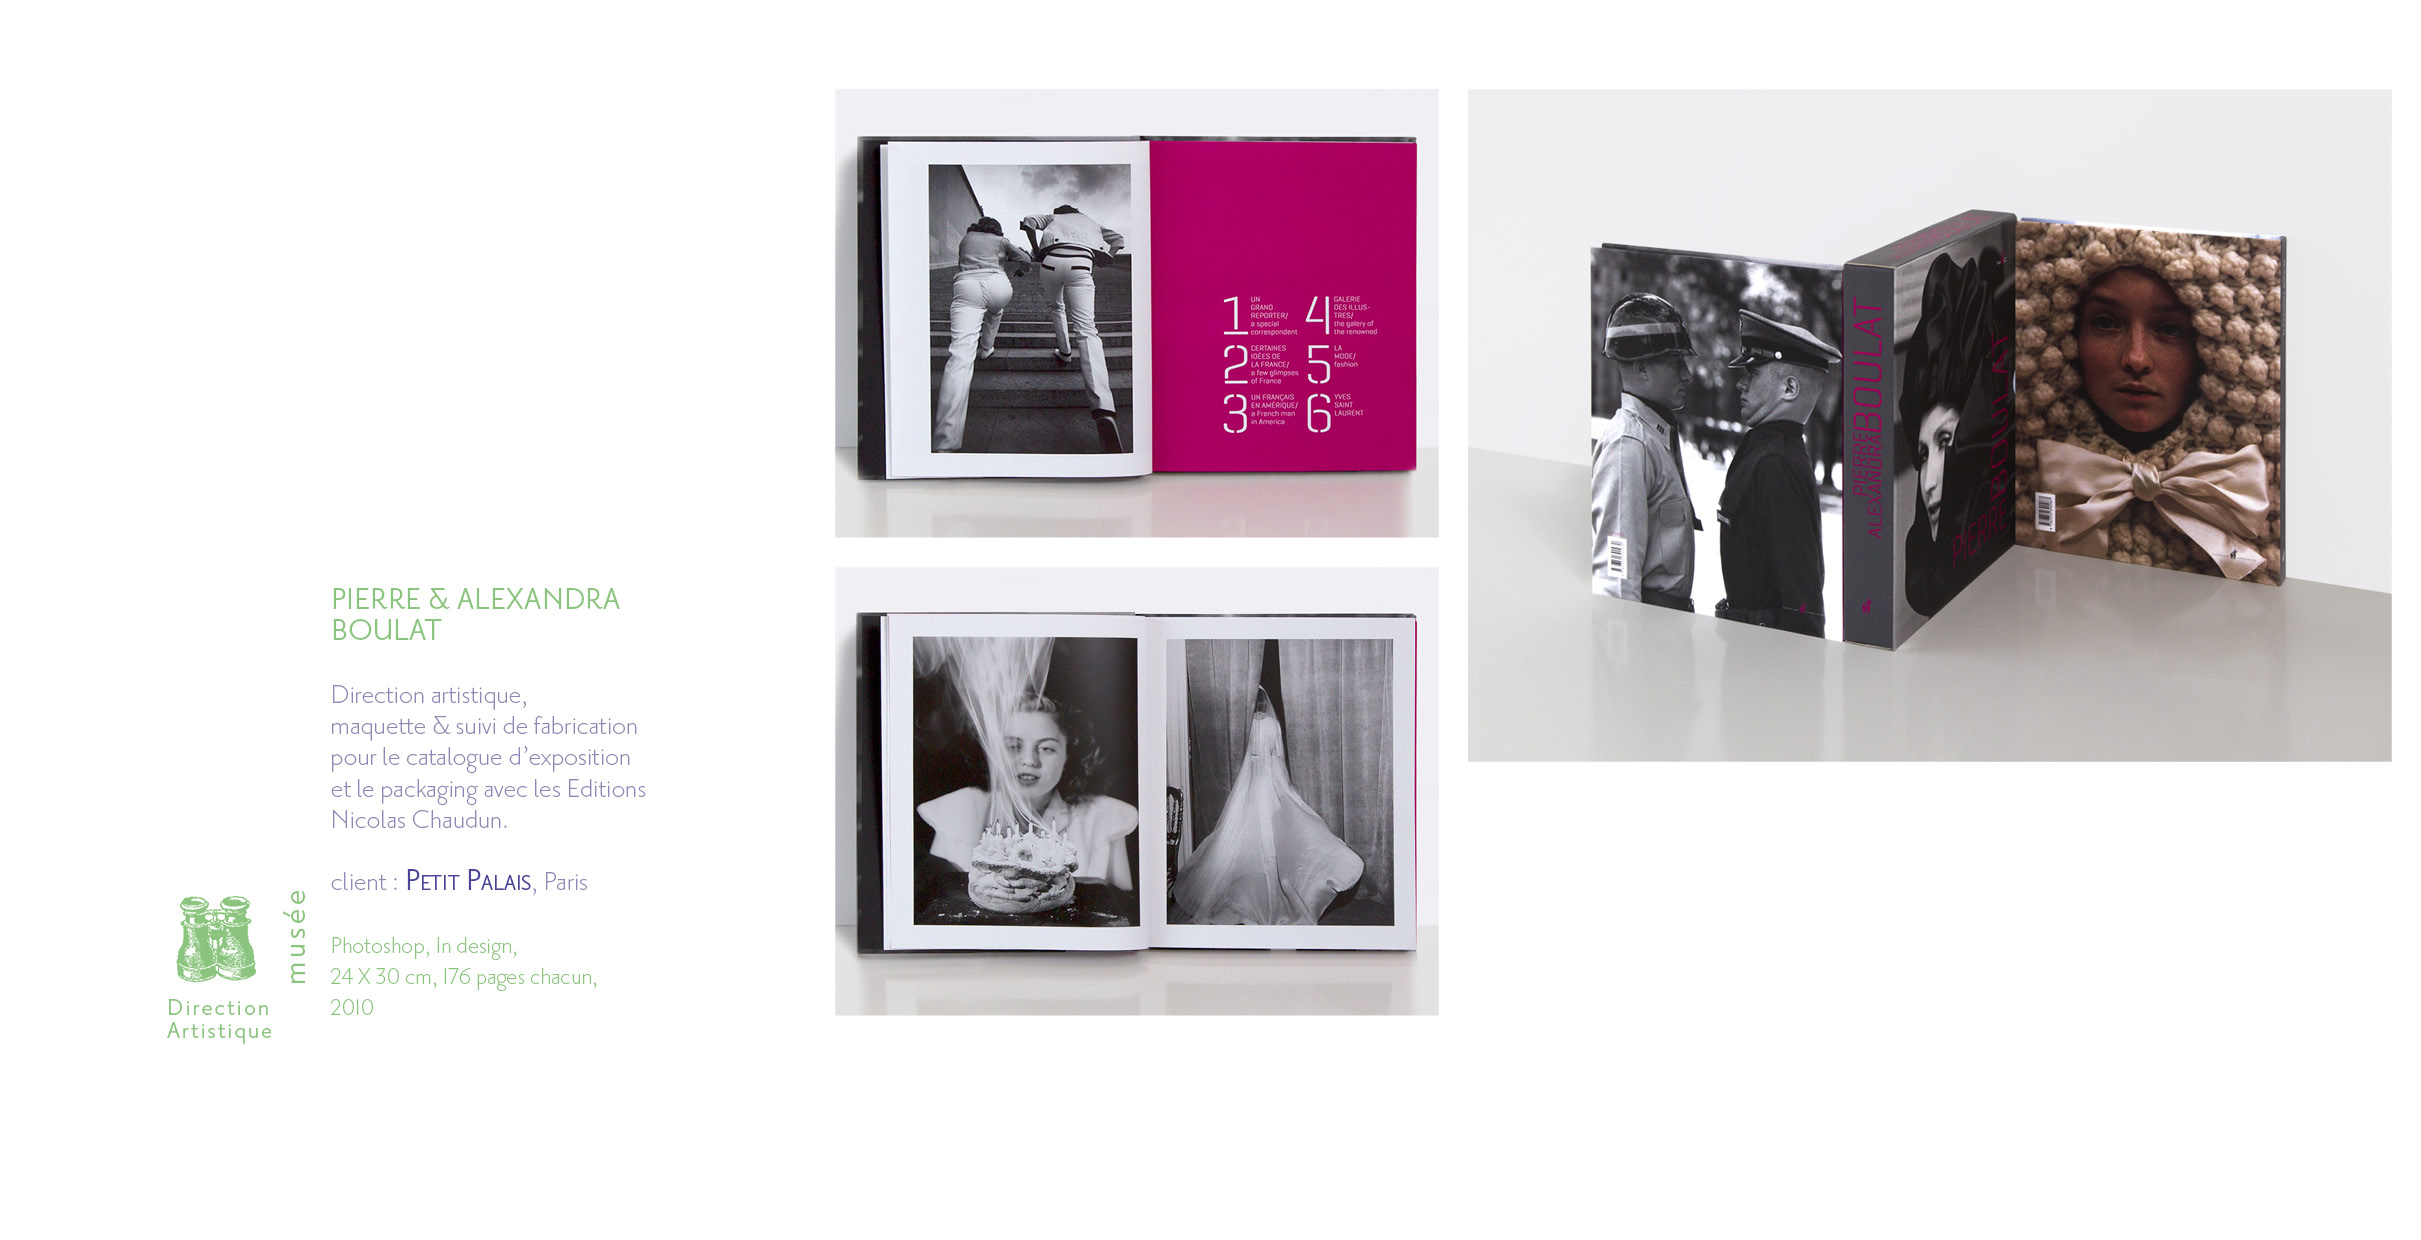 Catalogue expo : "Pierre & Alexandra Boulat"